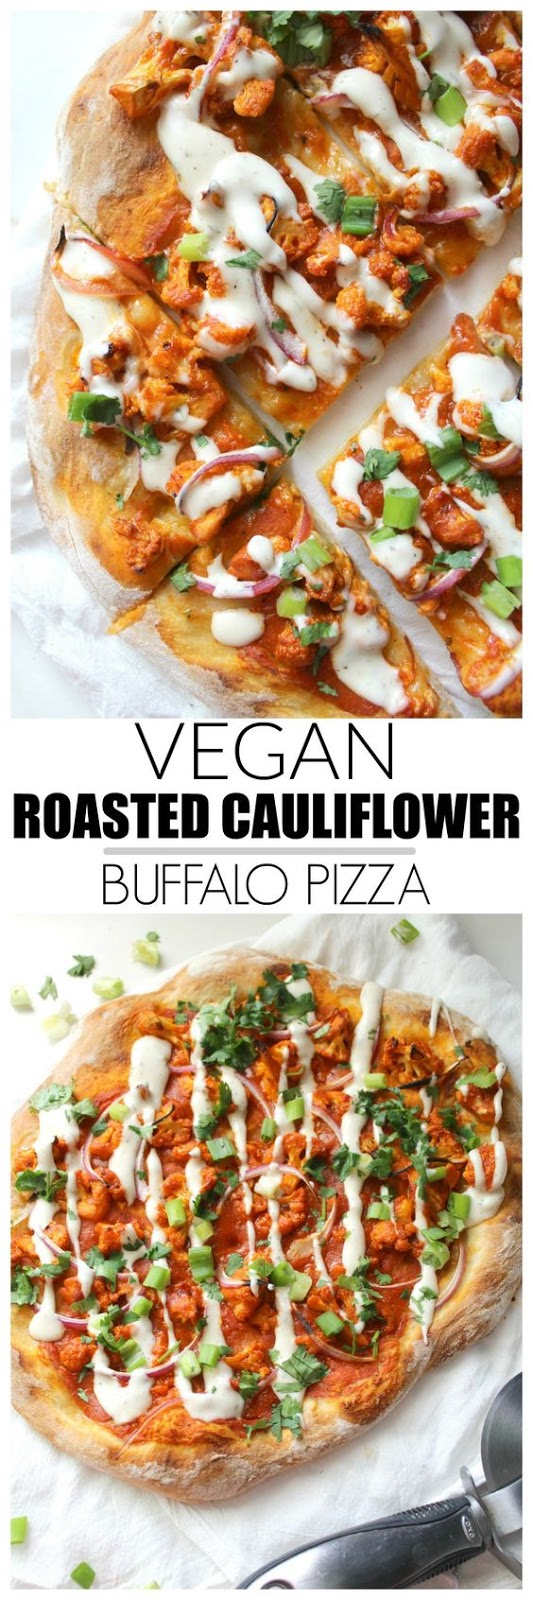 Vegan Roasted Cauliflower Buffalo Pizza